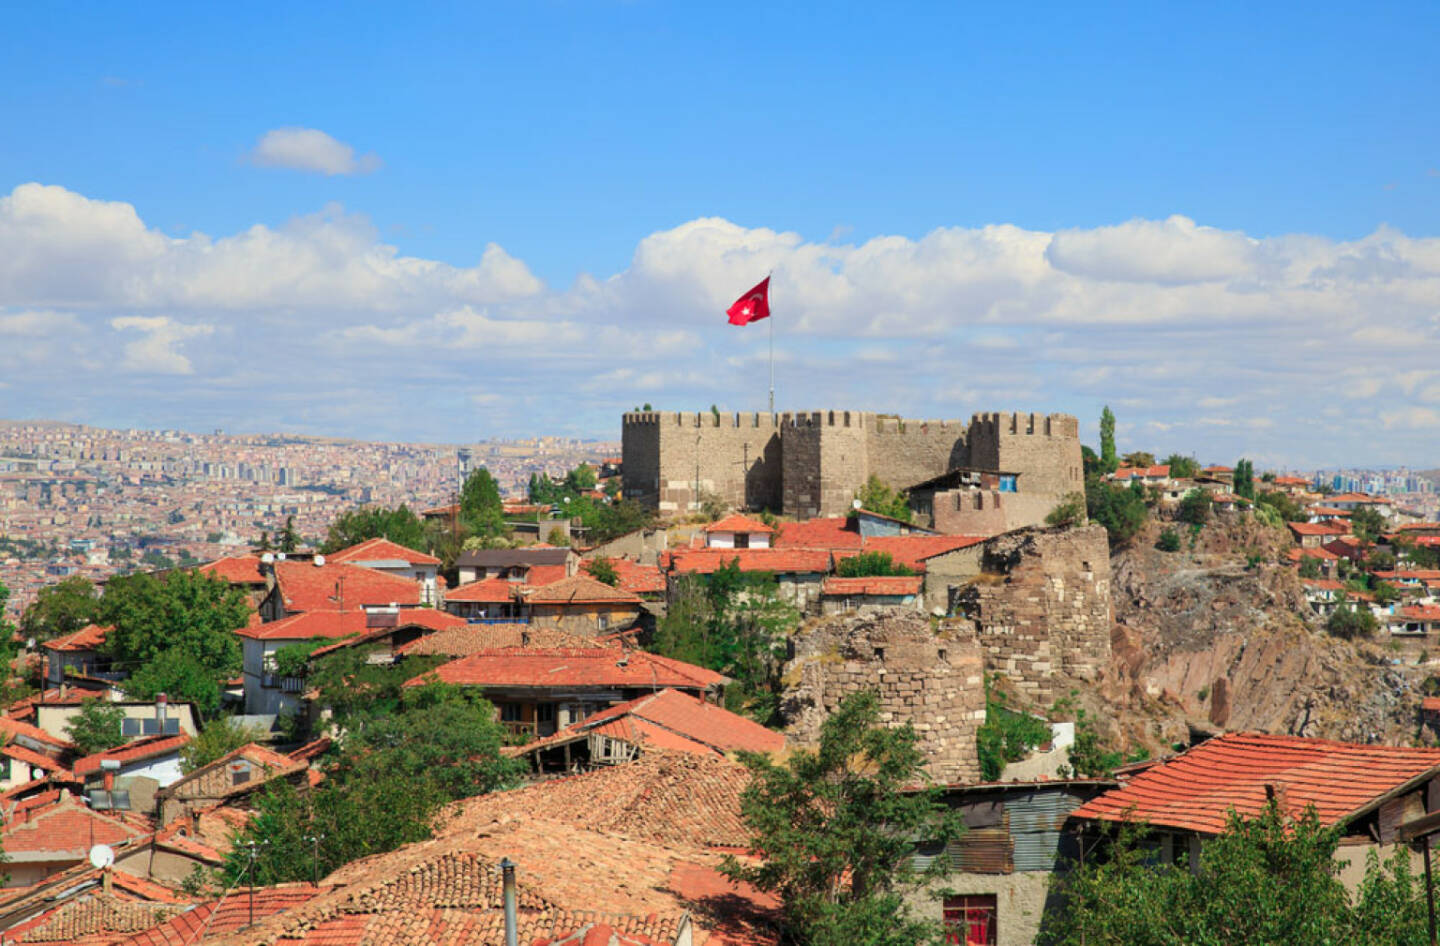 Ankara, Türkei, http://www.shutterstock.com/de/pic-164921735/stock-photo-ankara-castle-ankara-capital-city-of-turkey.html